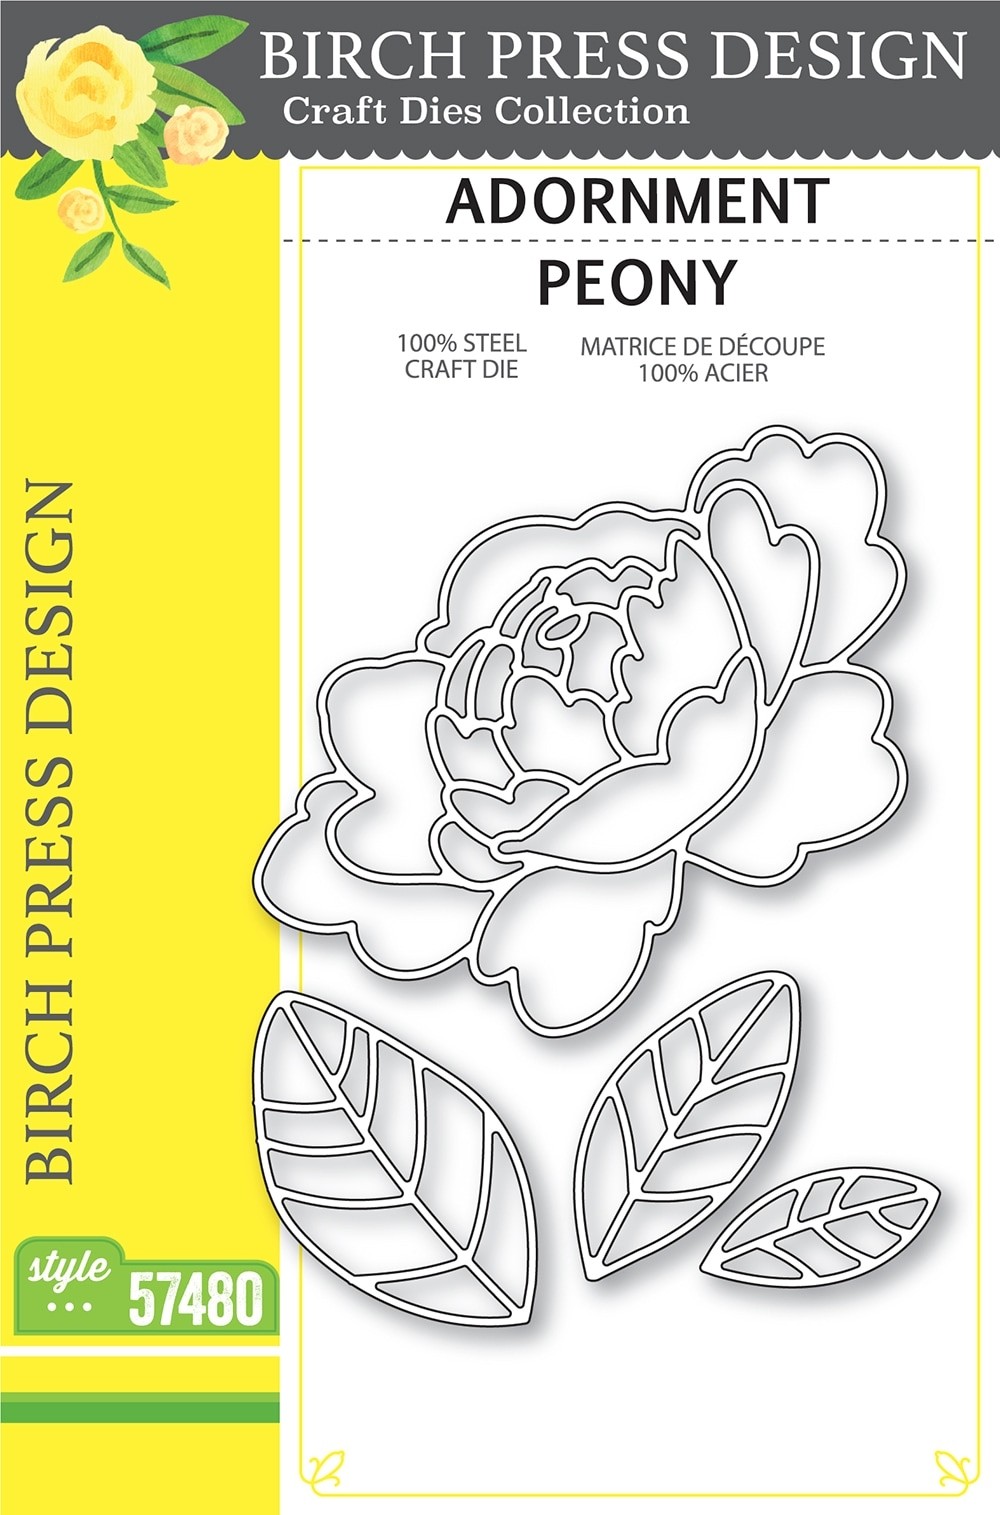 Birch Press Adornment Peony 57480